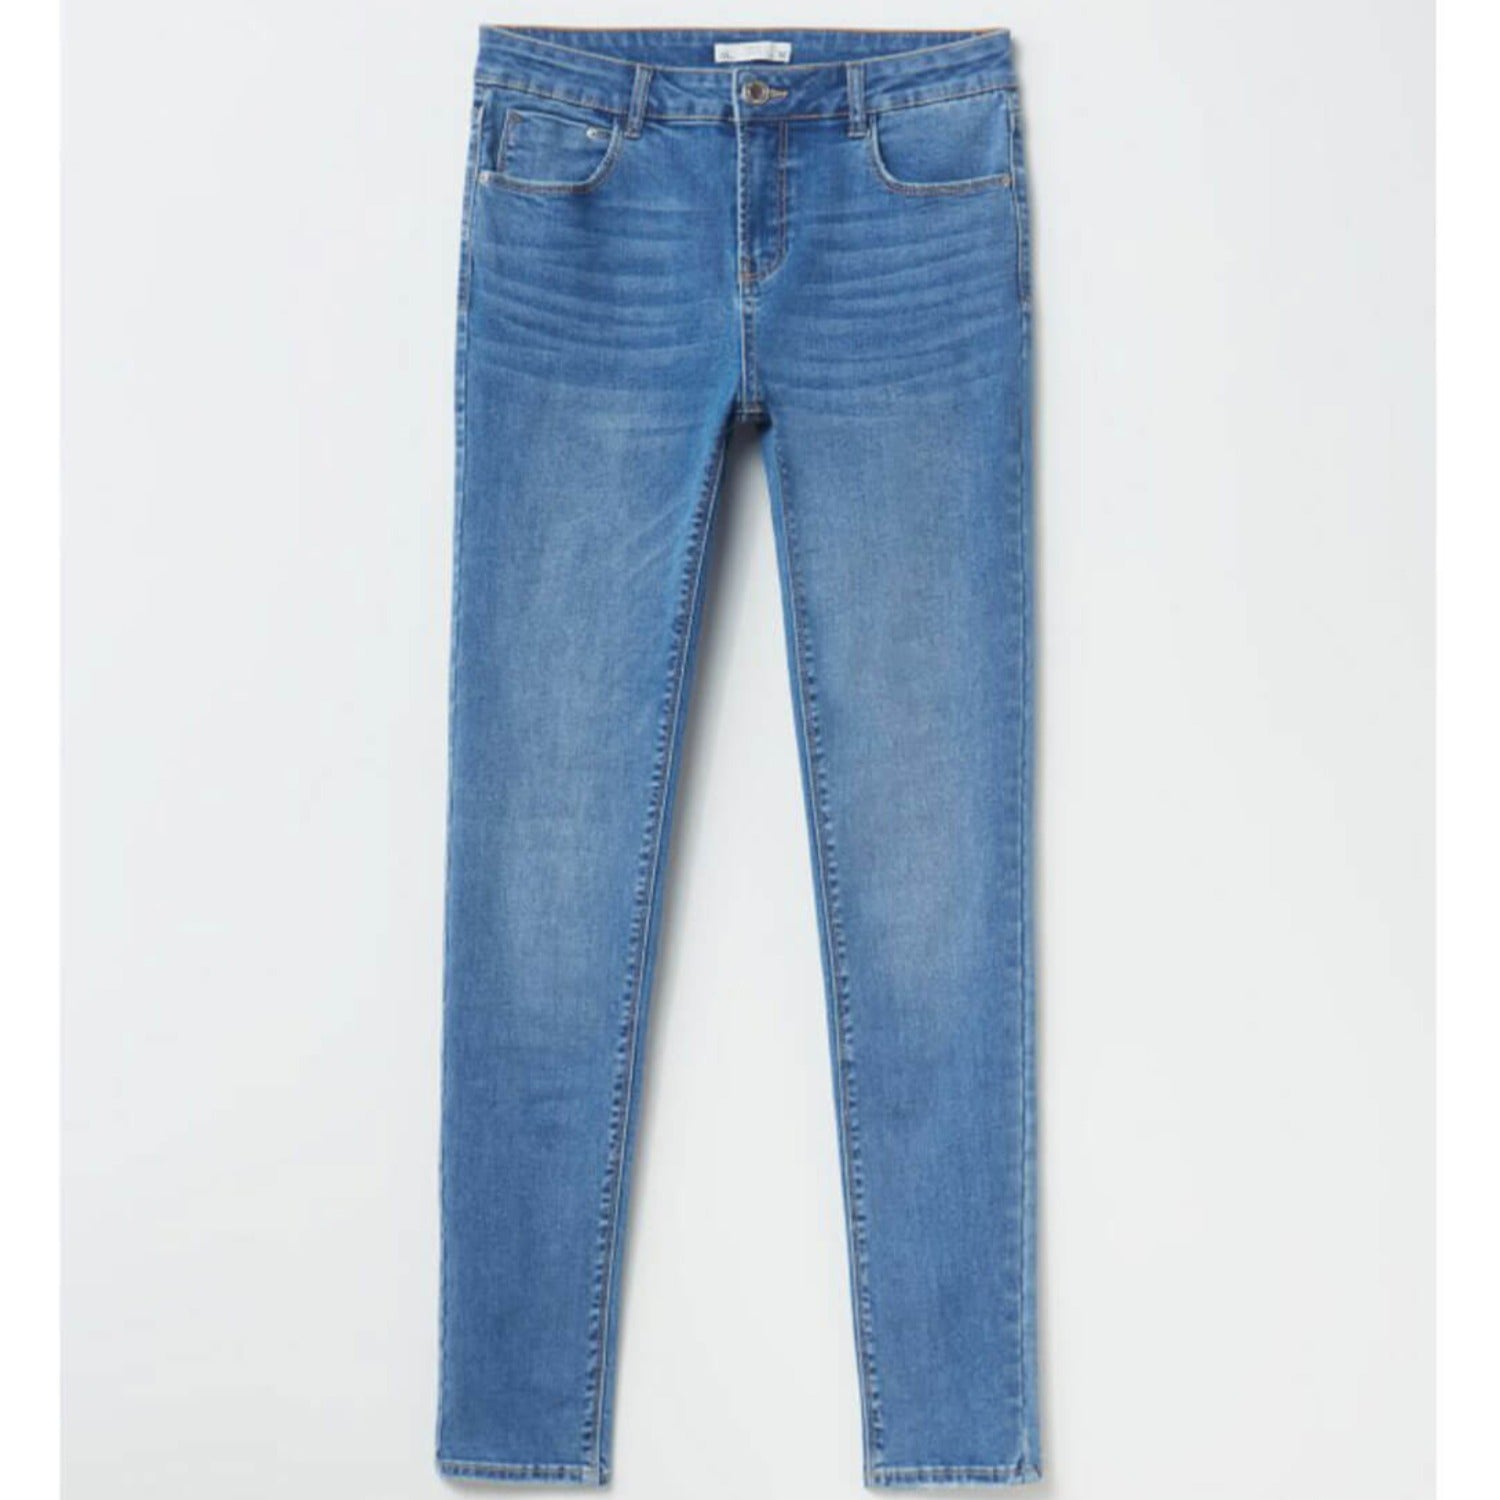 Sfera Skinny Jeans - Medium Royal 1 Shaws Department Stores